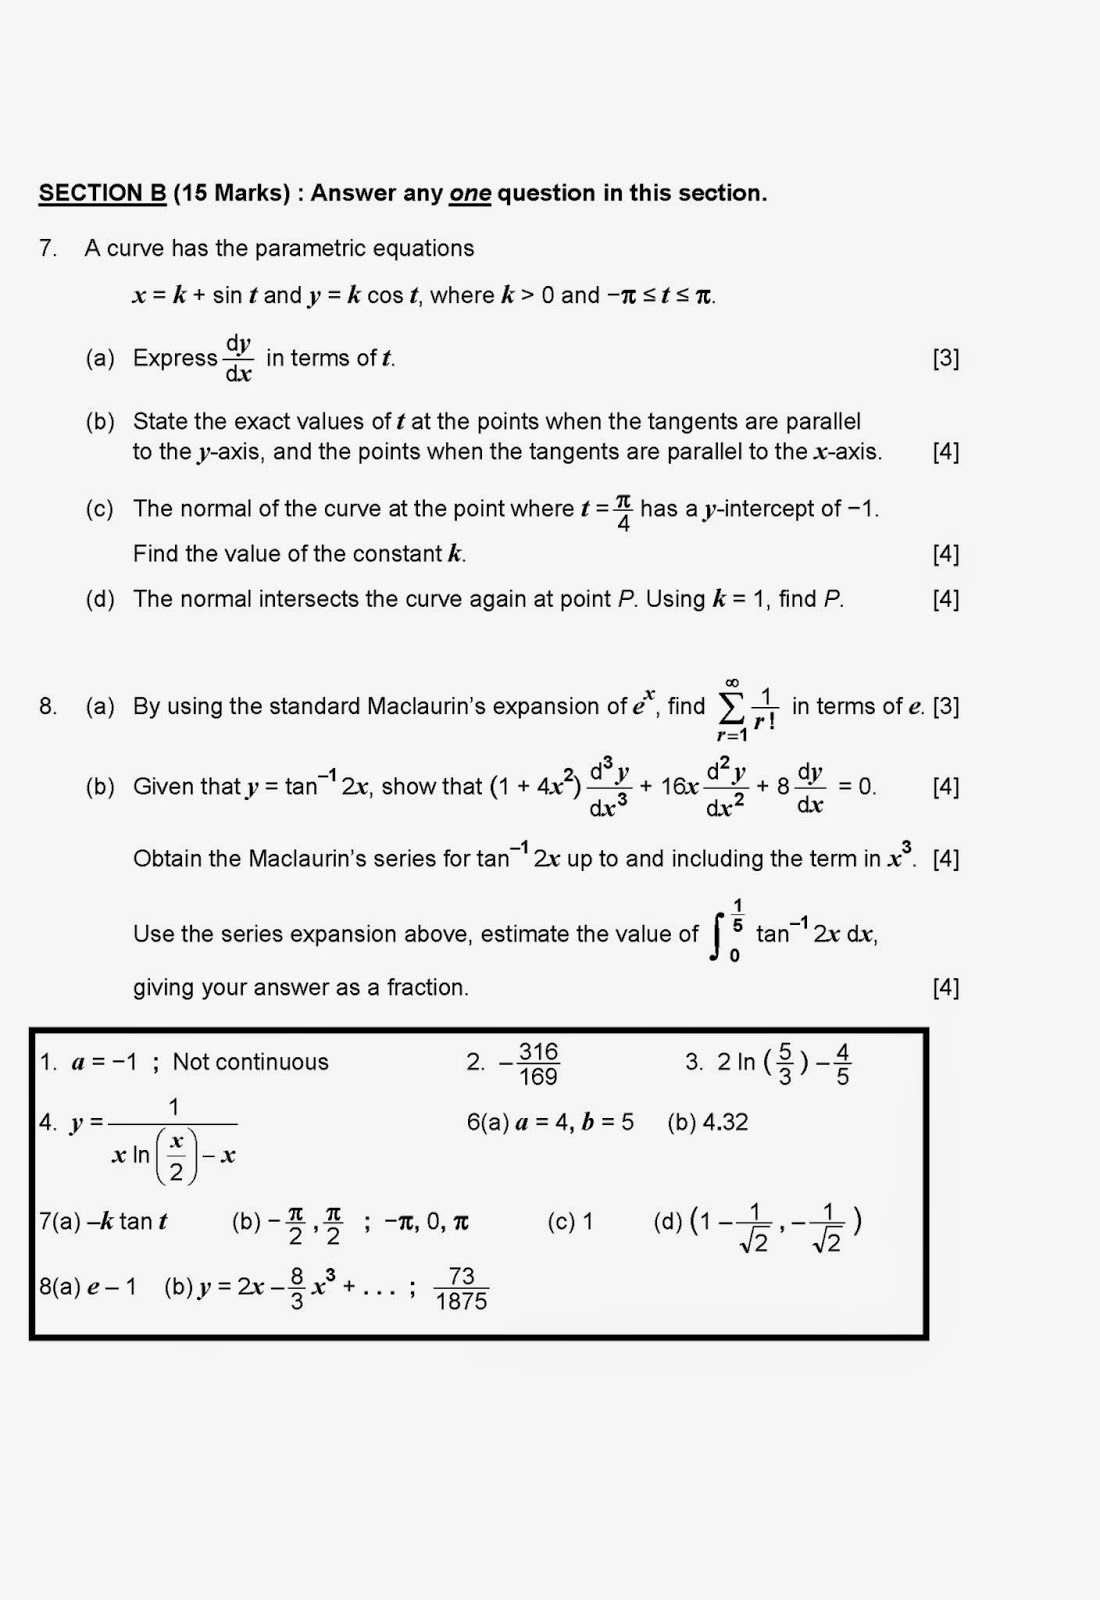 Stpm mathematics t coursework 2013 term 1